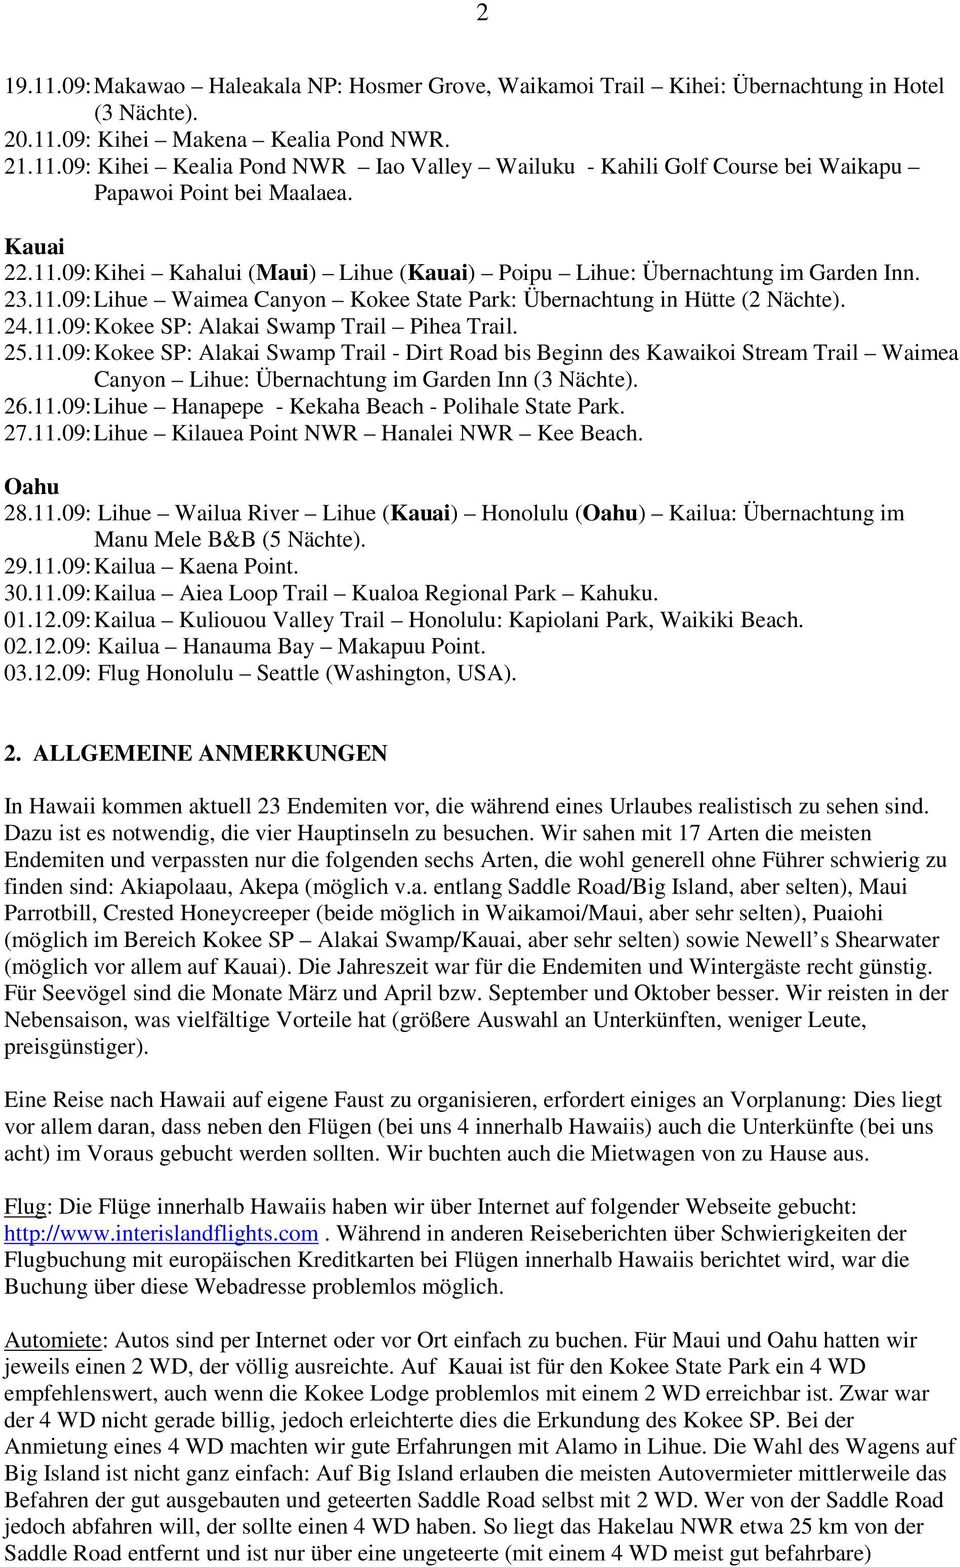 25.11.09: Kokee SP: Alakai Swamp Trail - Dirt Road bis Beginn des Kawaikoi Stream Trail Waimea Canyon Lihue: Übernachtung im Garden Inn (3 Nächte). 26.11.09: Lihue Hanapepe - Kekaha Beach - Polihale State Park.